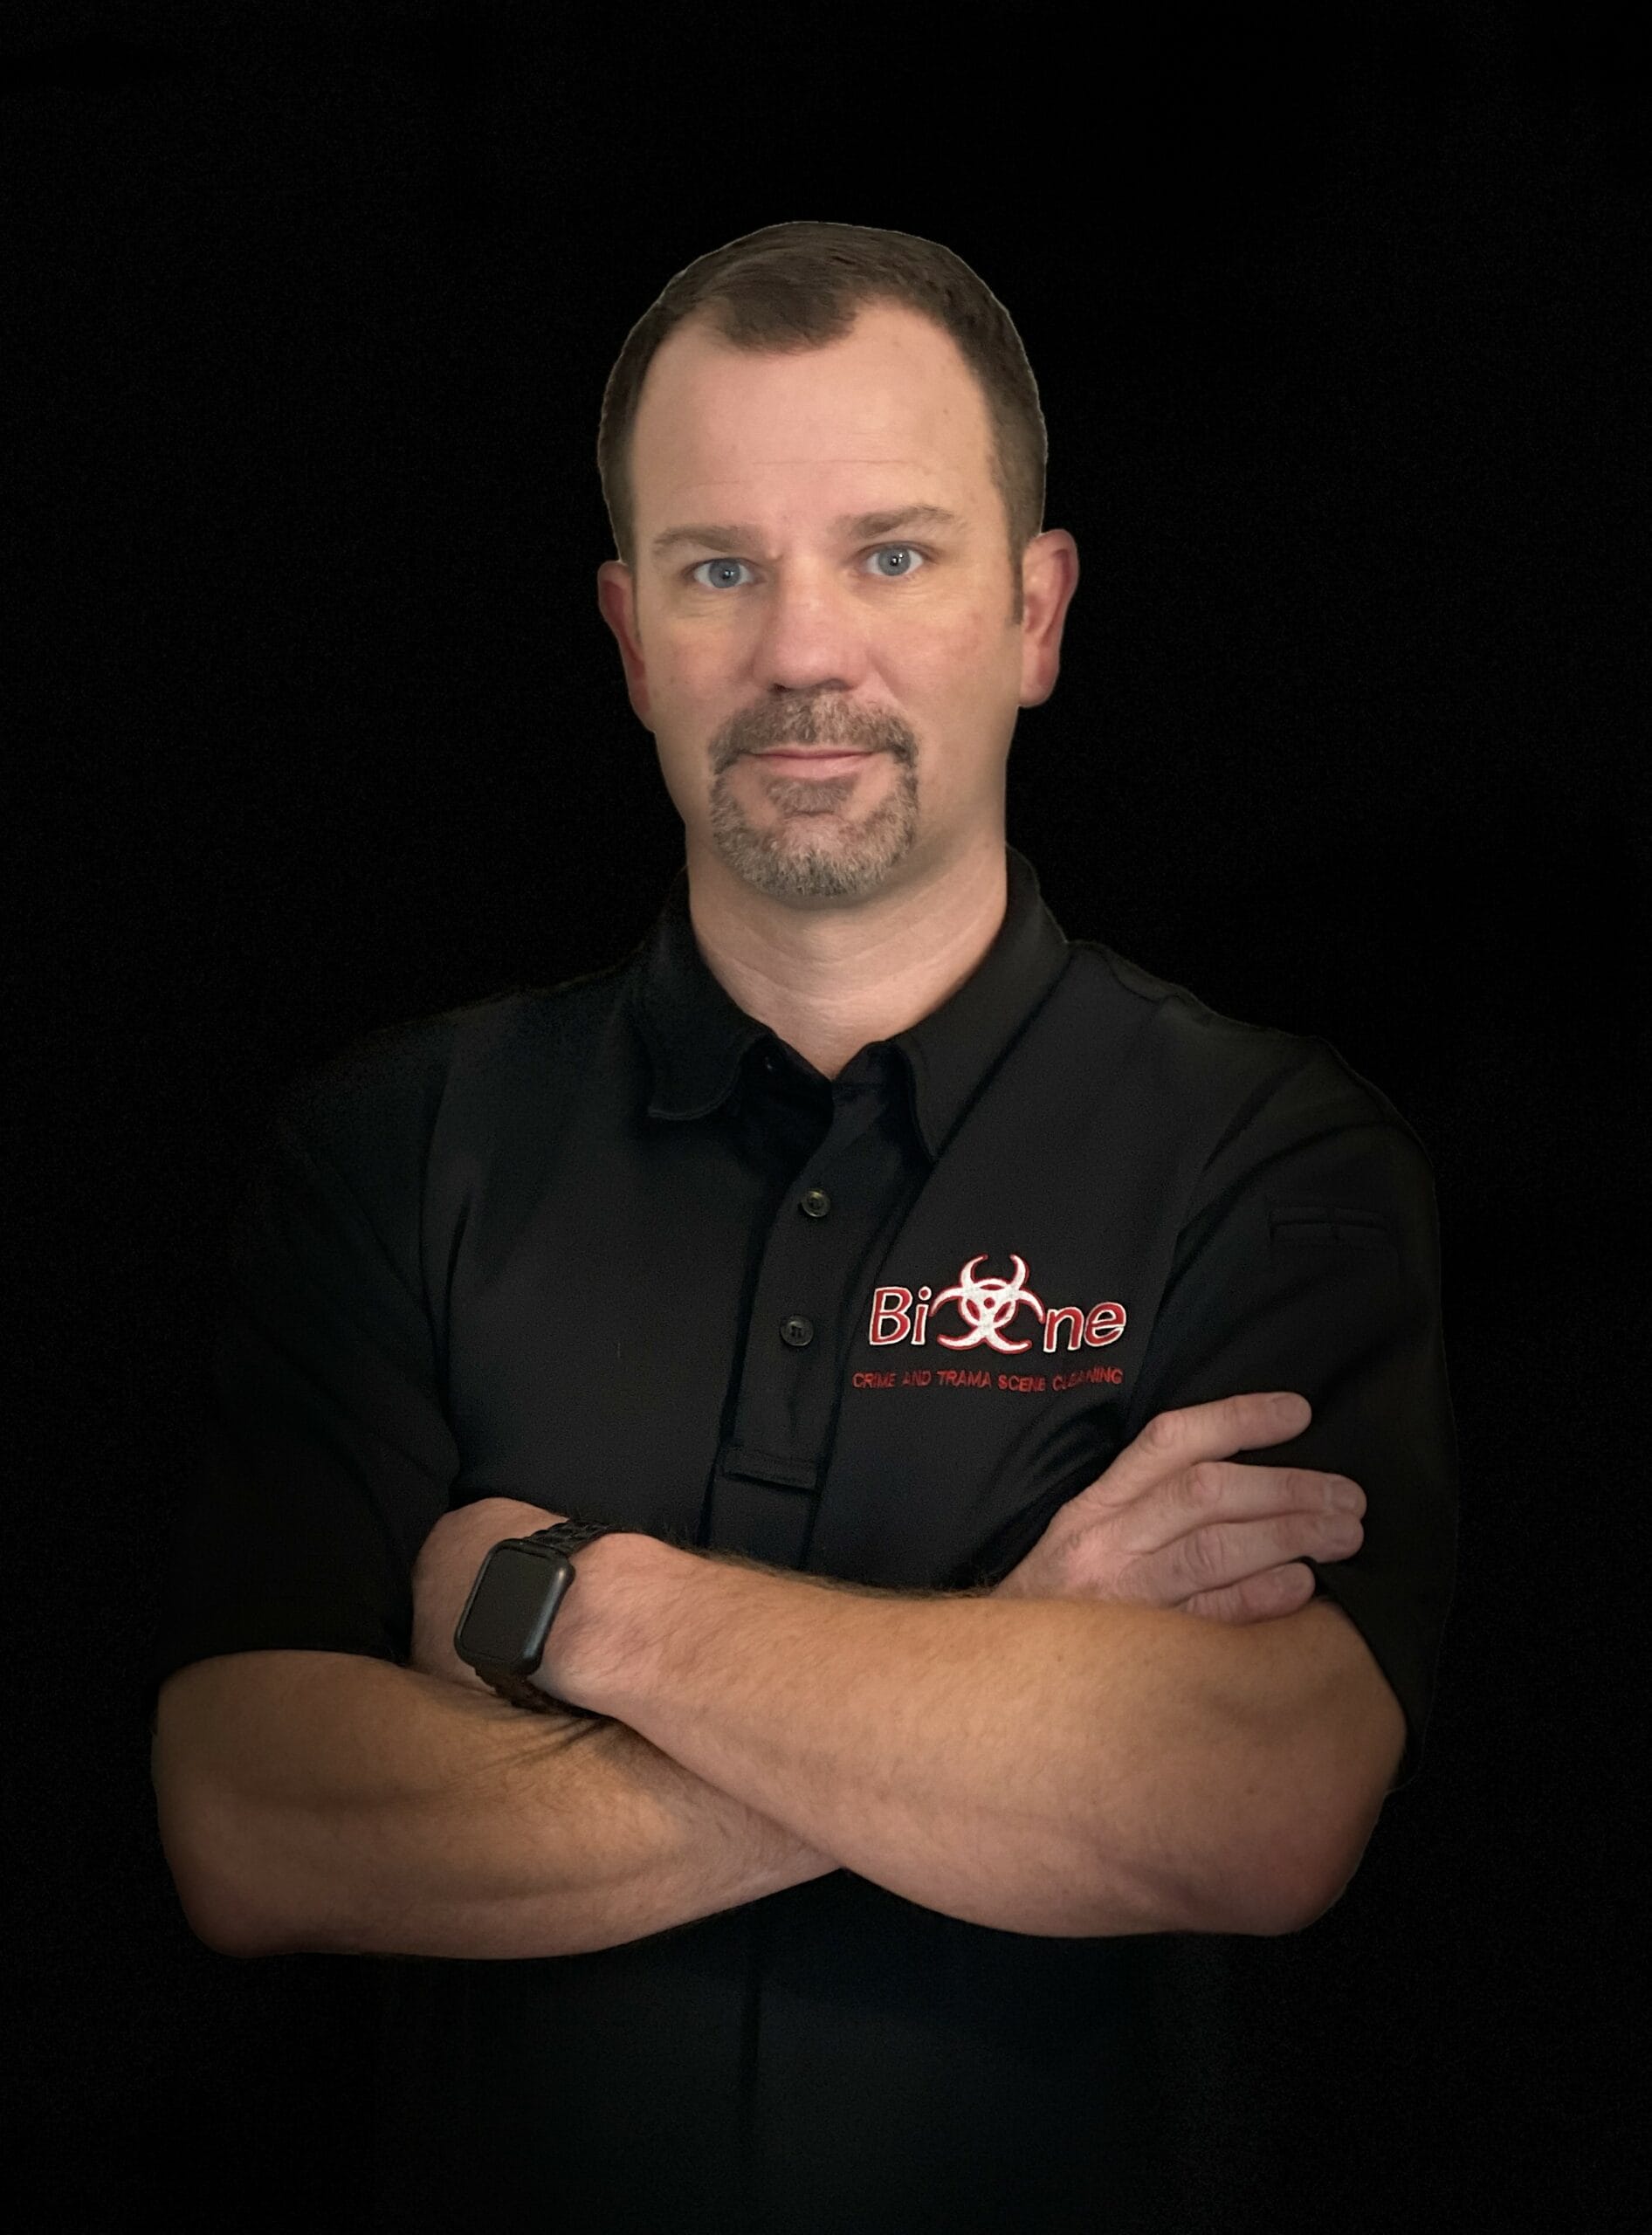 Bio-One of South Carolina biohazard and decontamination Company Owner, Kris Elliott